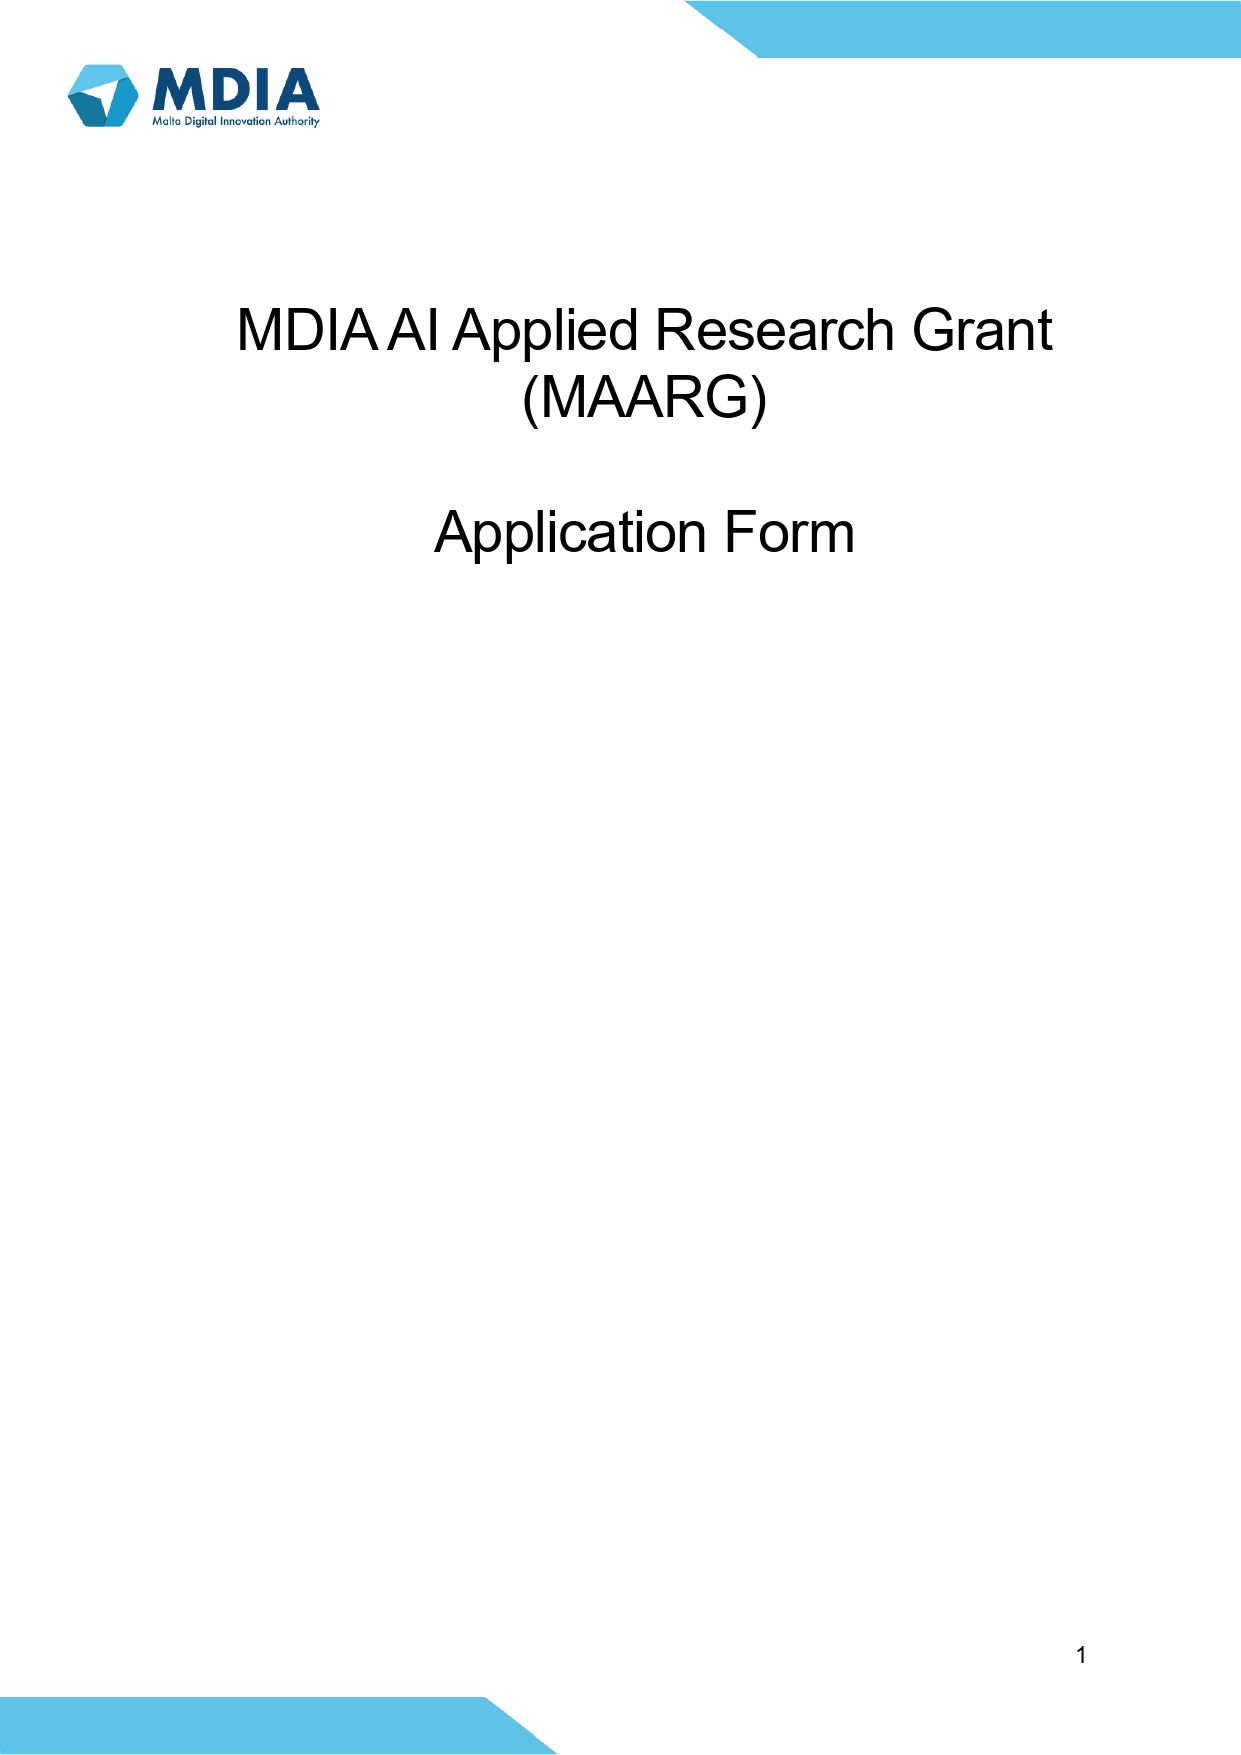 MDIA Schemes - AI Research Grant - Application Form